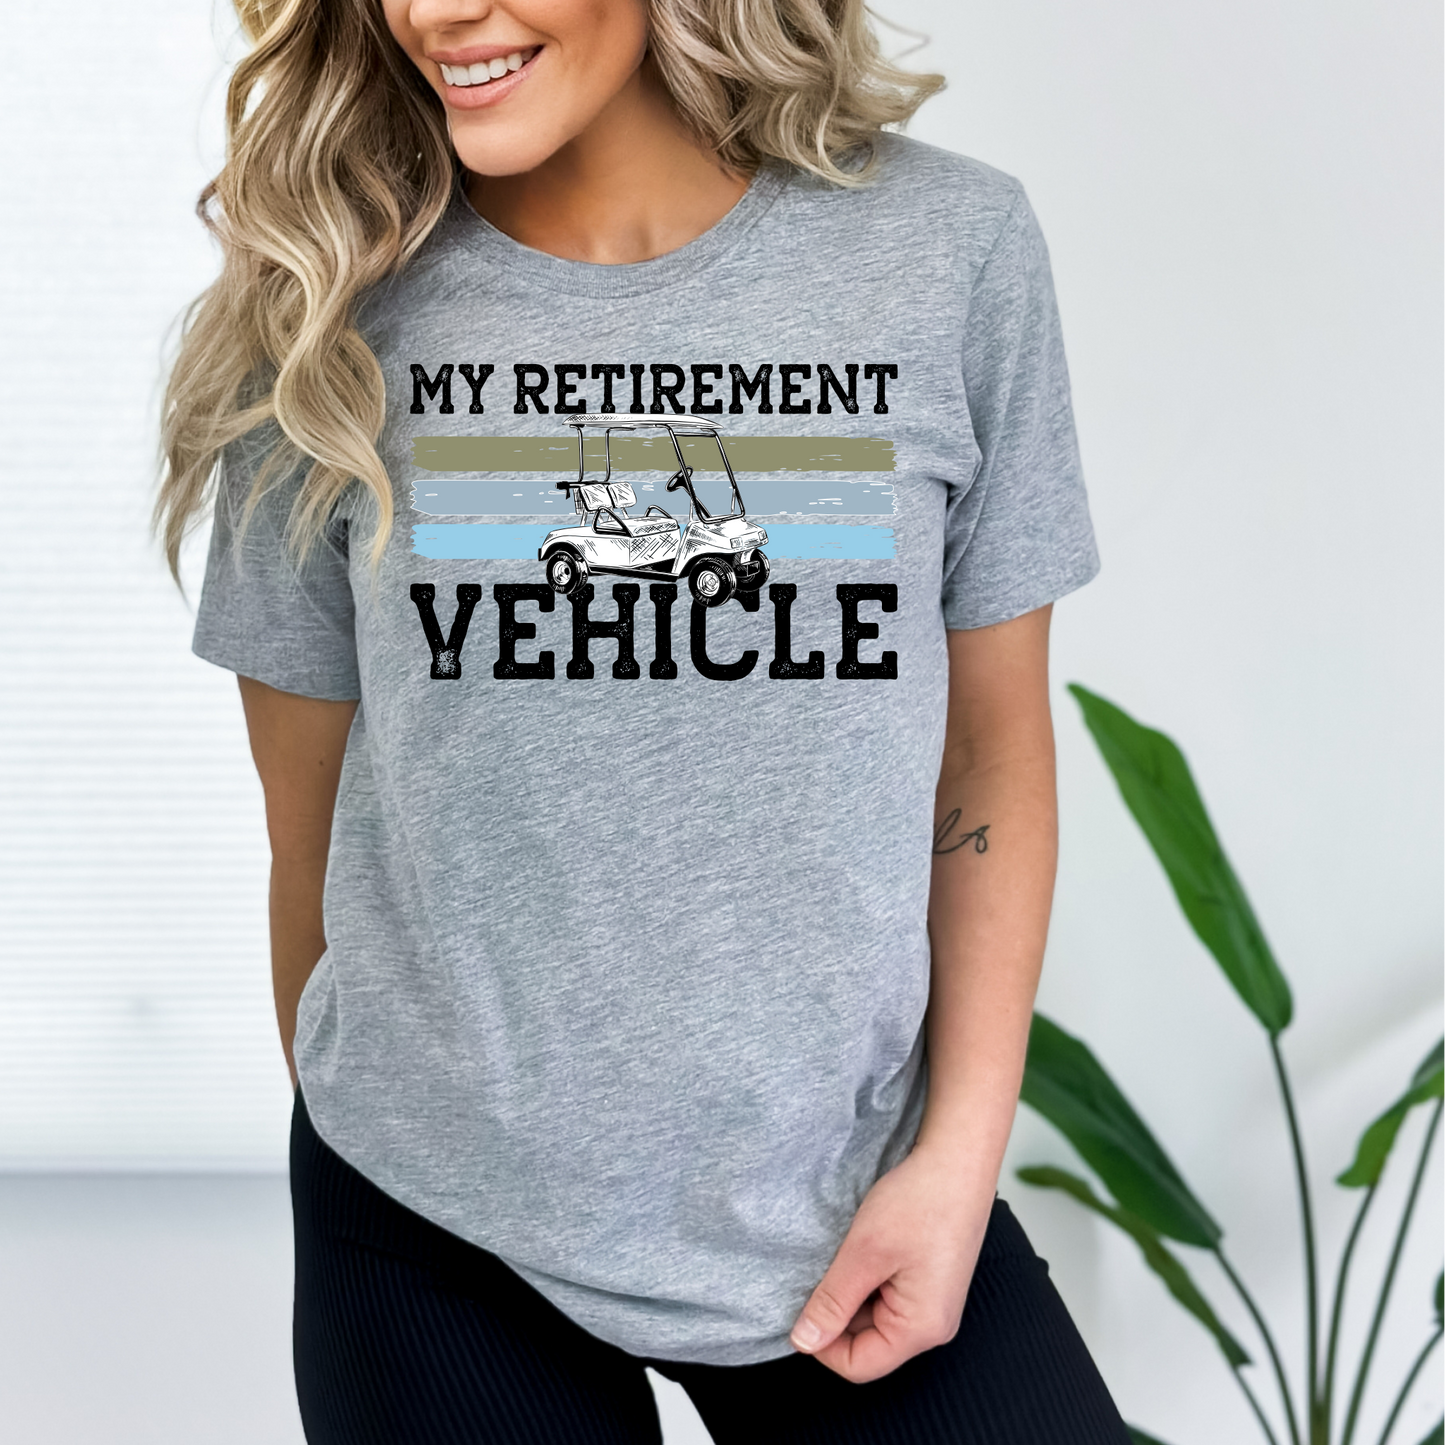 My Retirement Vehicle - Golf Cart - Golfing